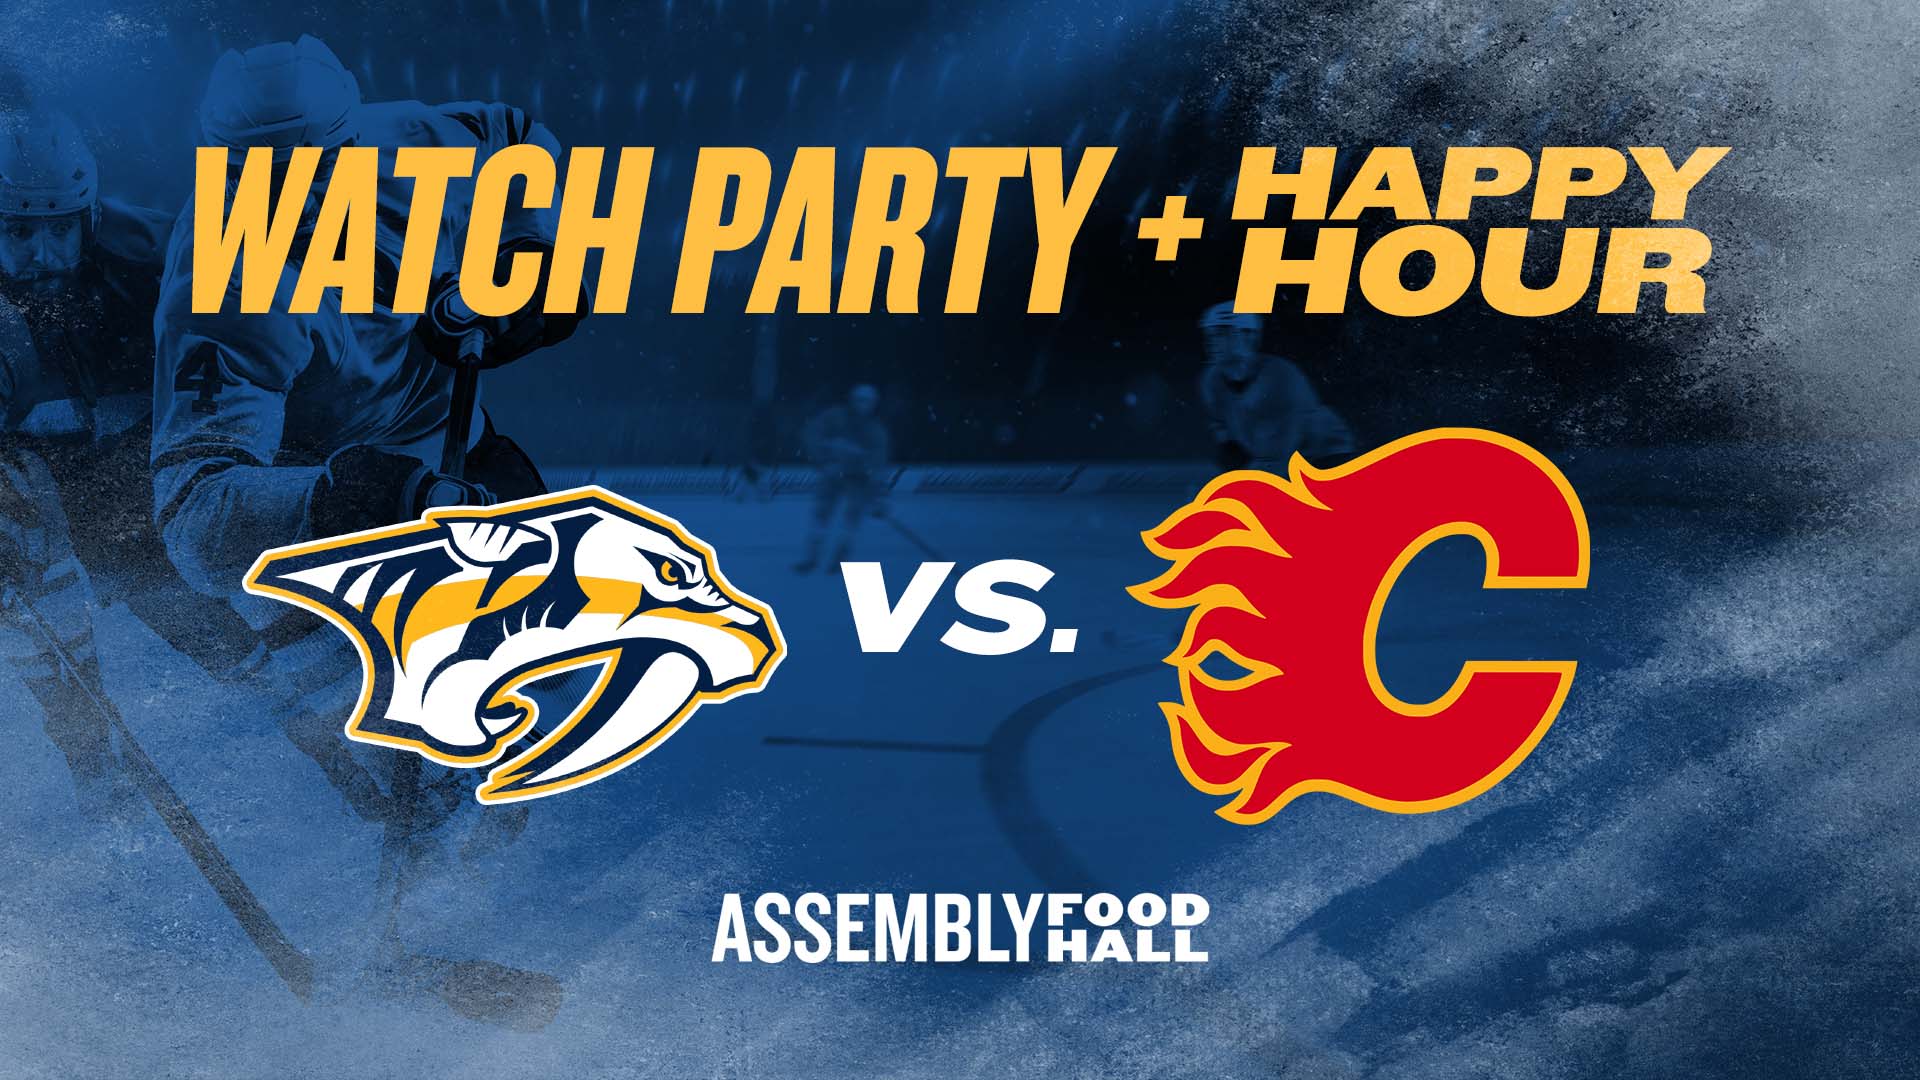 Predators vs. Calgary Flames | Watch Party & Happy Hour - hero